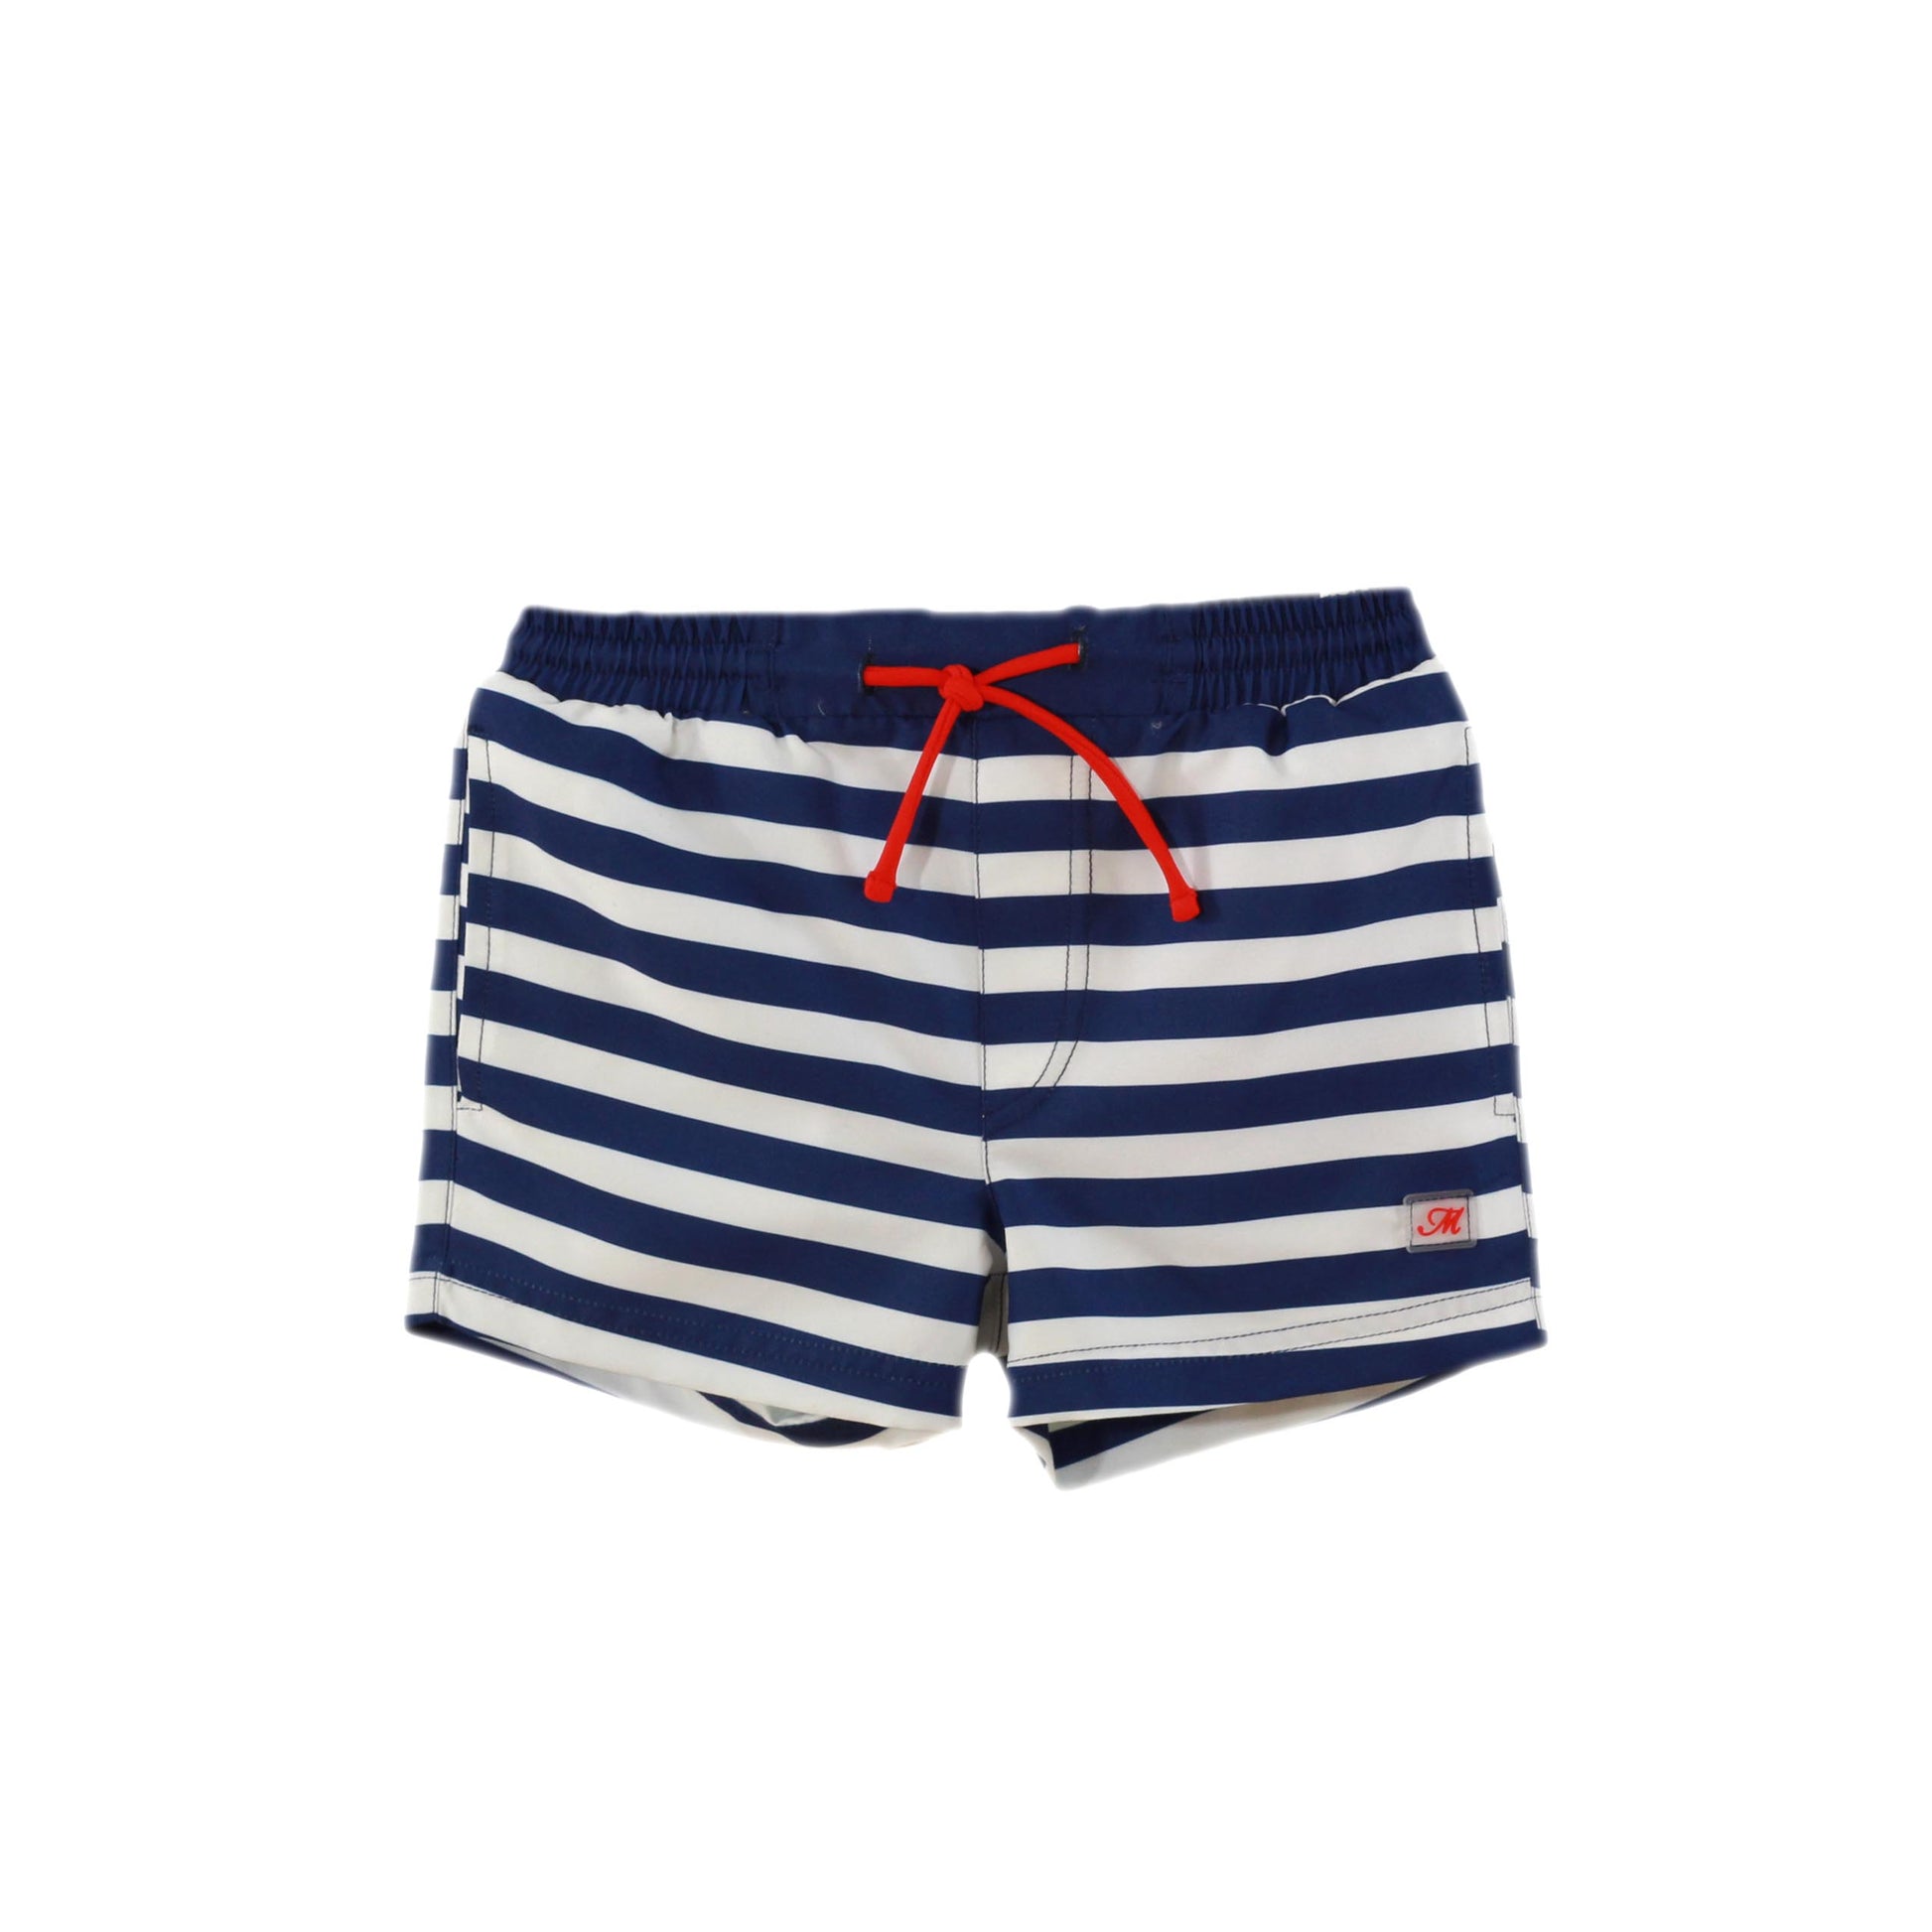 MIRANDA Sailor Navy Stripe Boys Swim Shorts & Top - 423